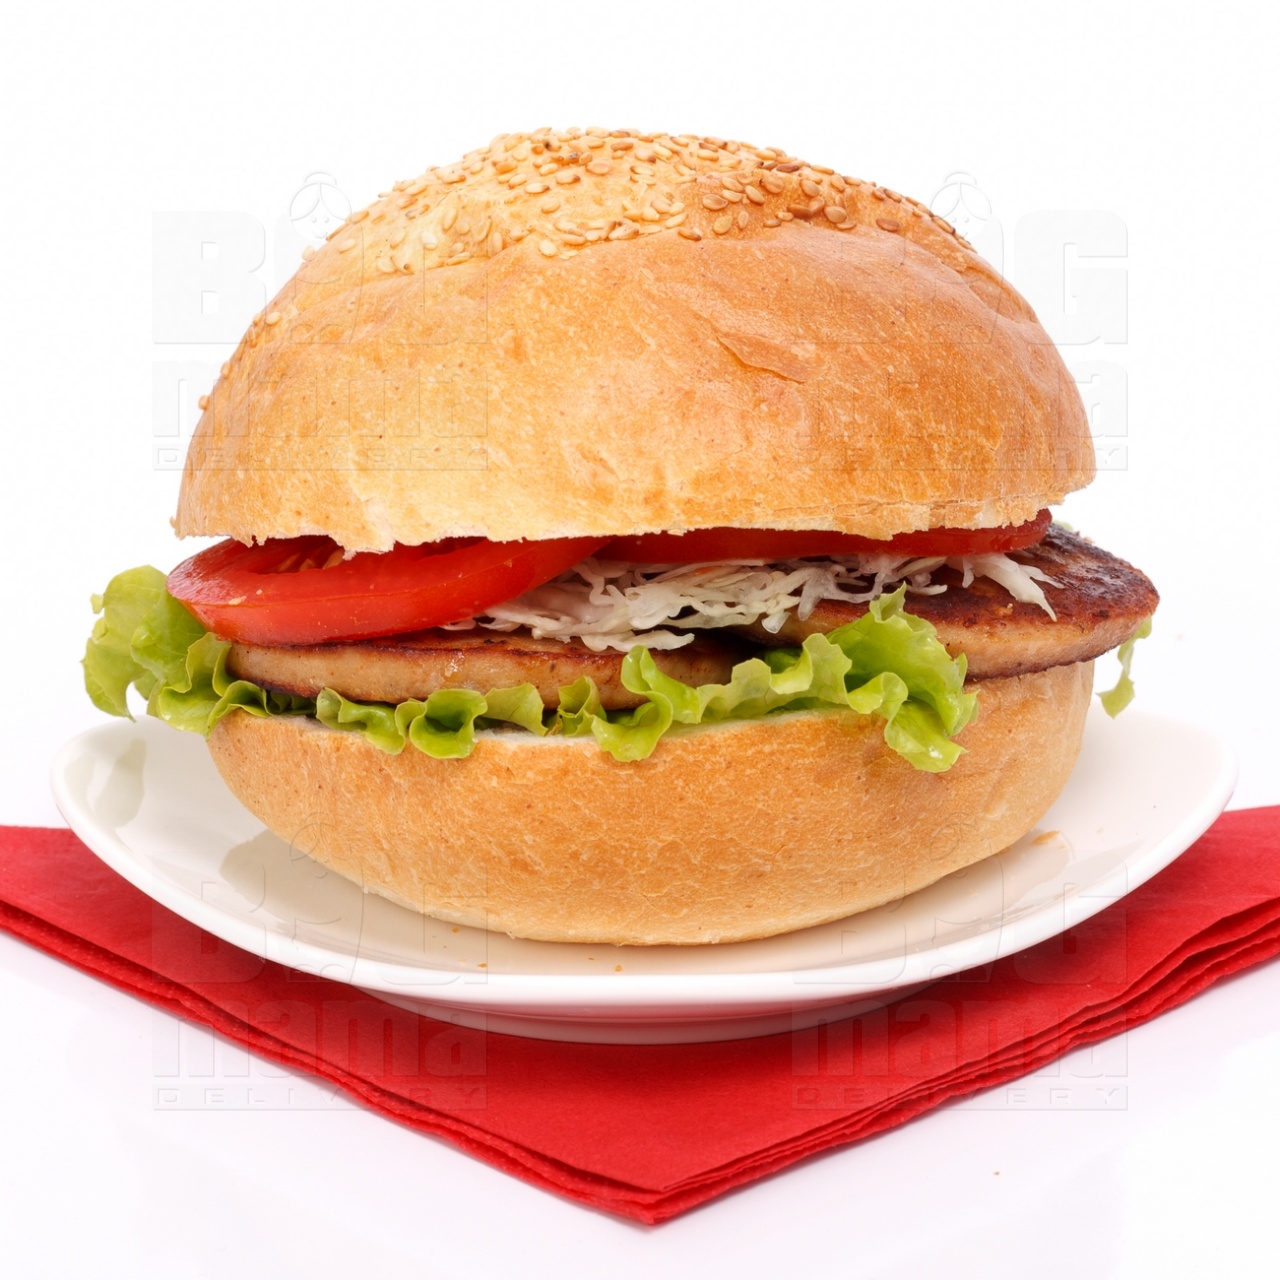 Product #50 image - Big hamburger